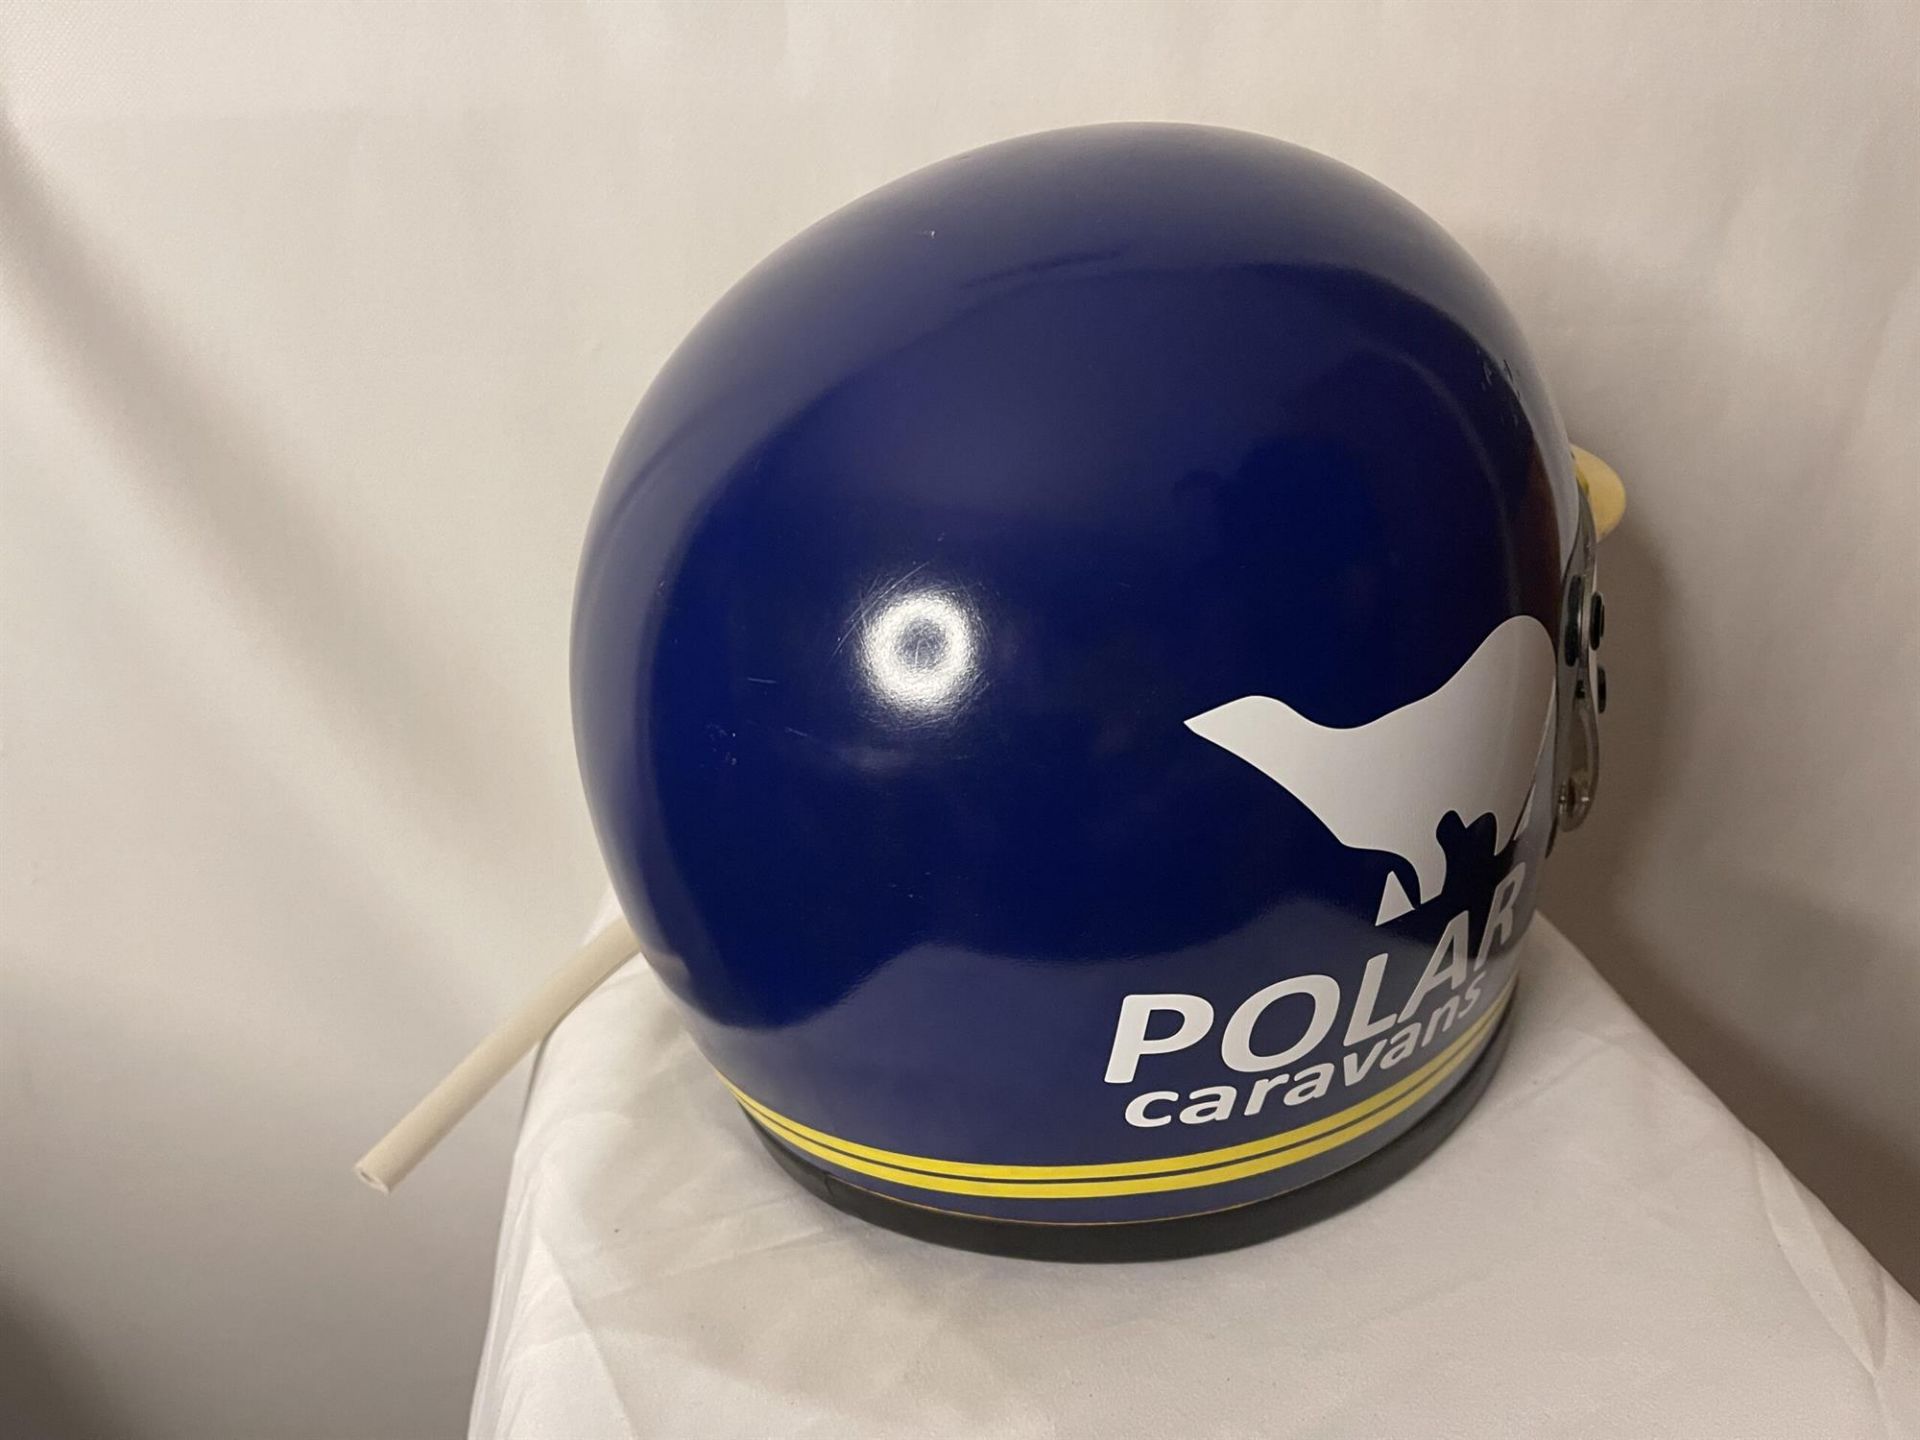 Replica Ronnie Peterson Bell Racestar 2 Helmet - Image 10 of 10